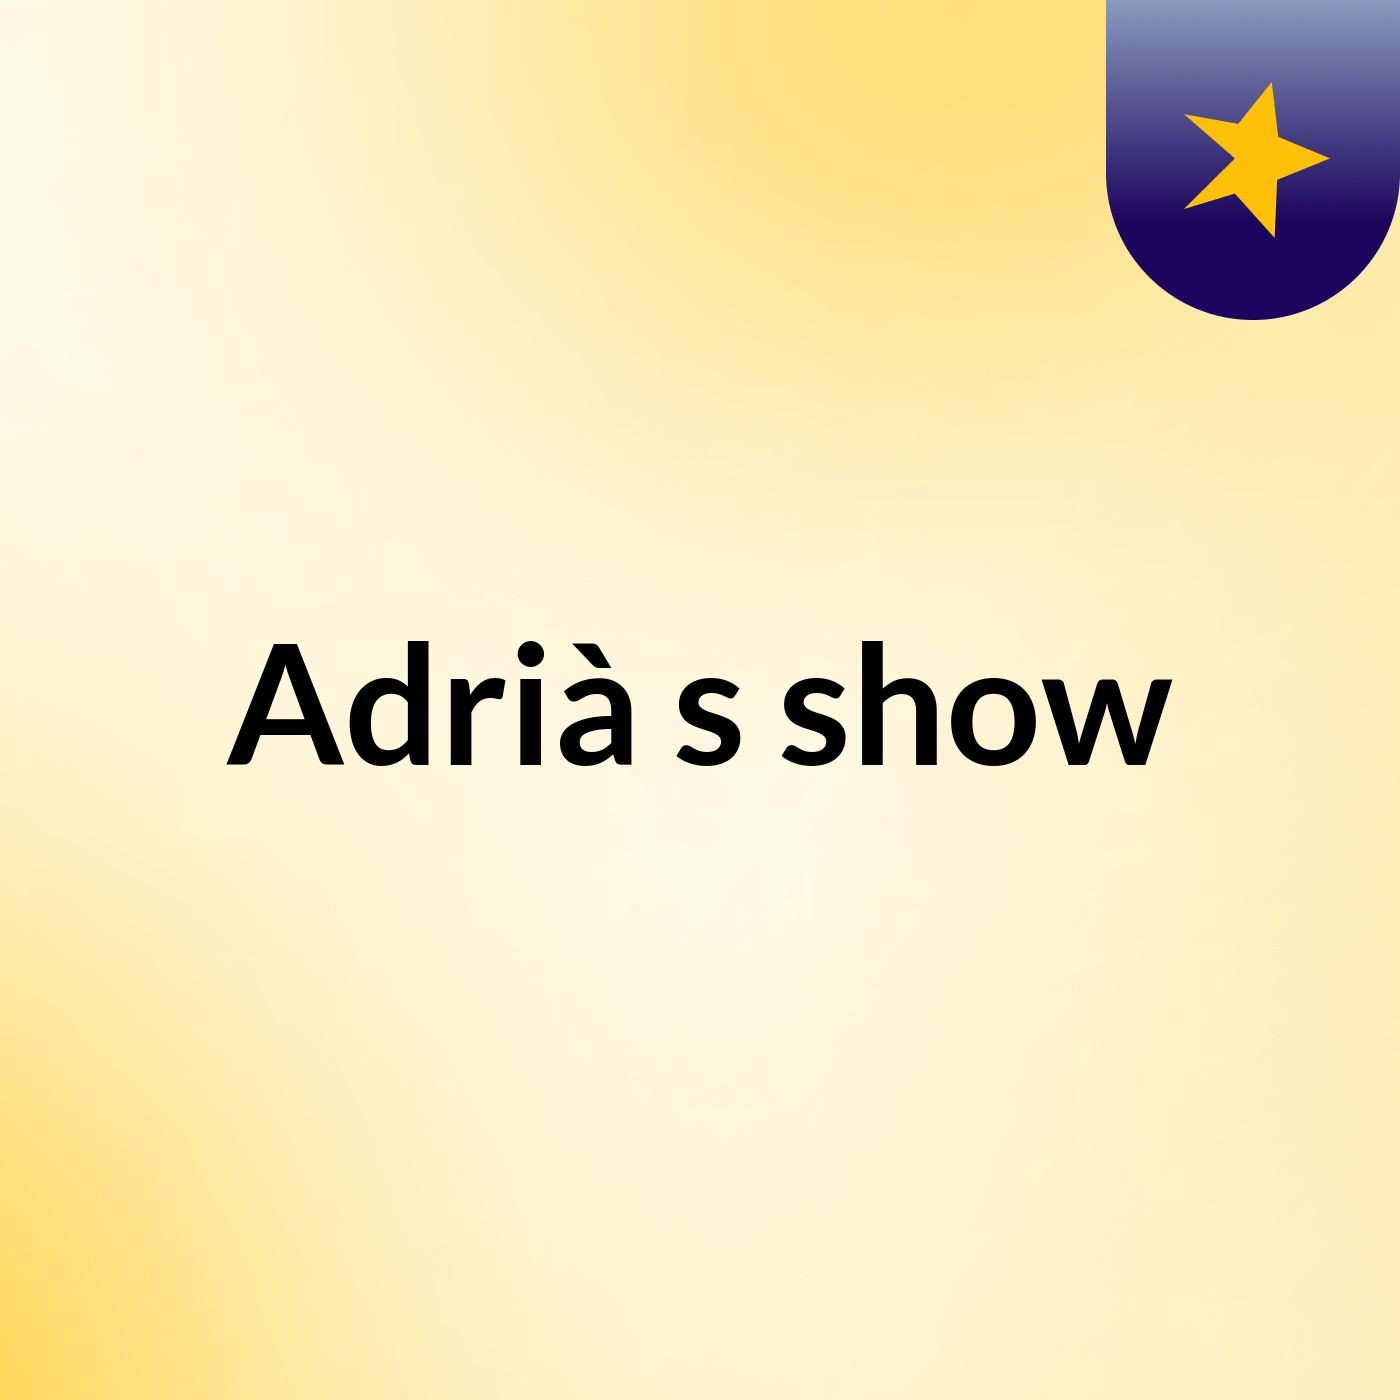 Adrià's show